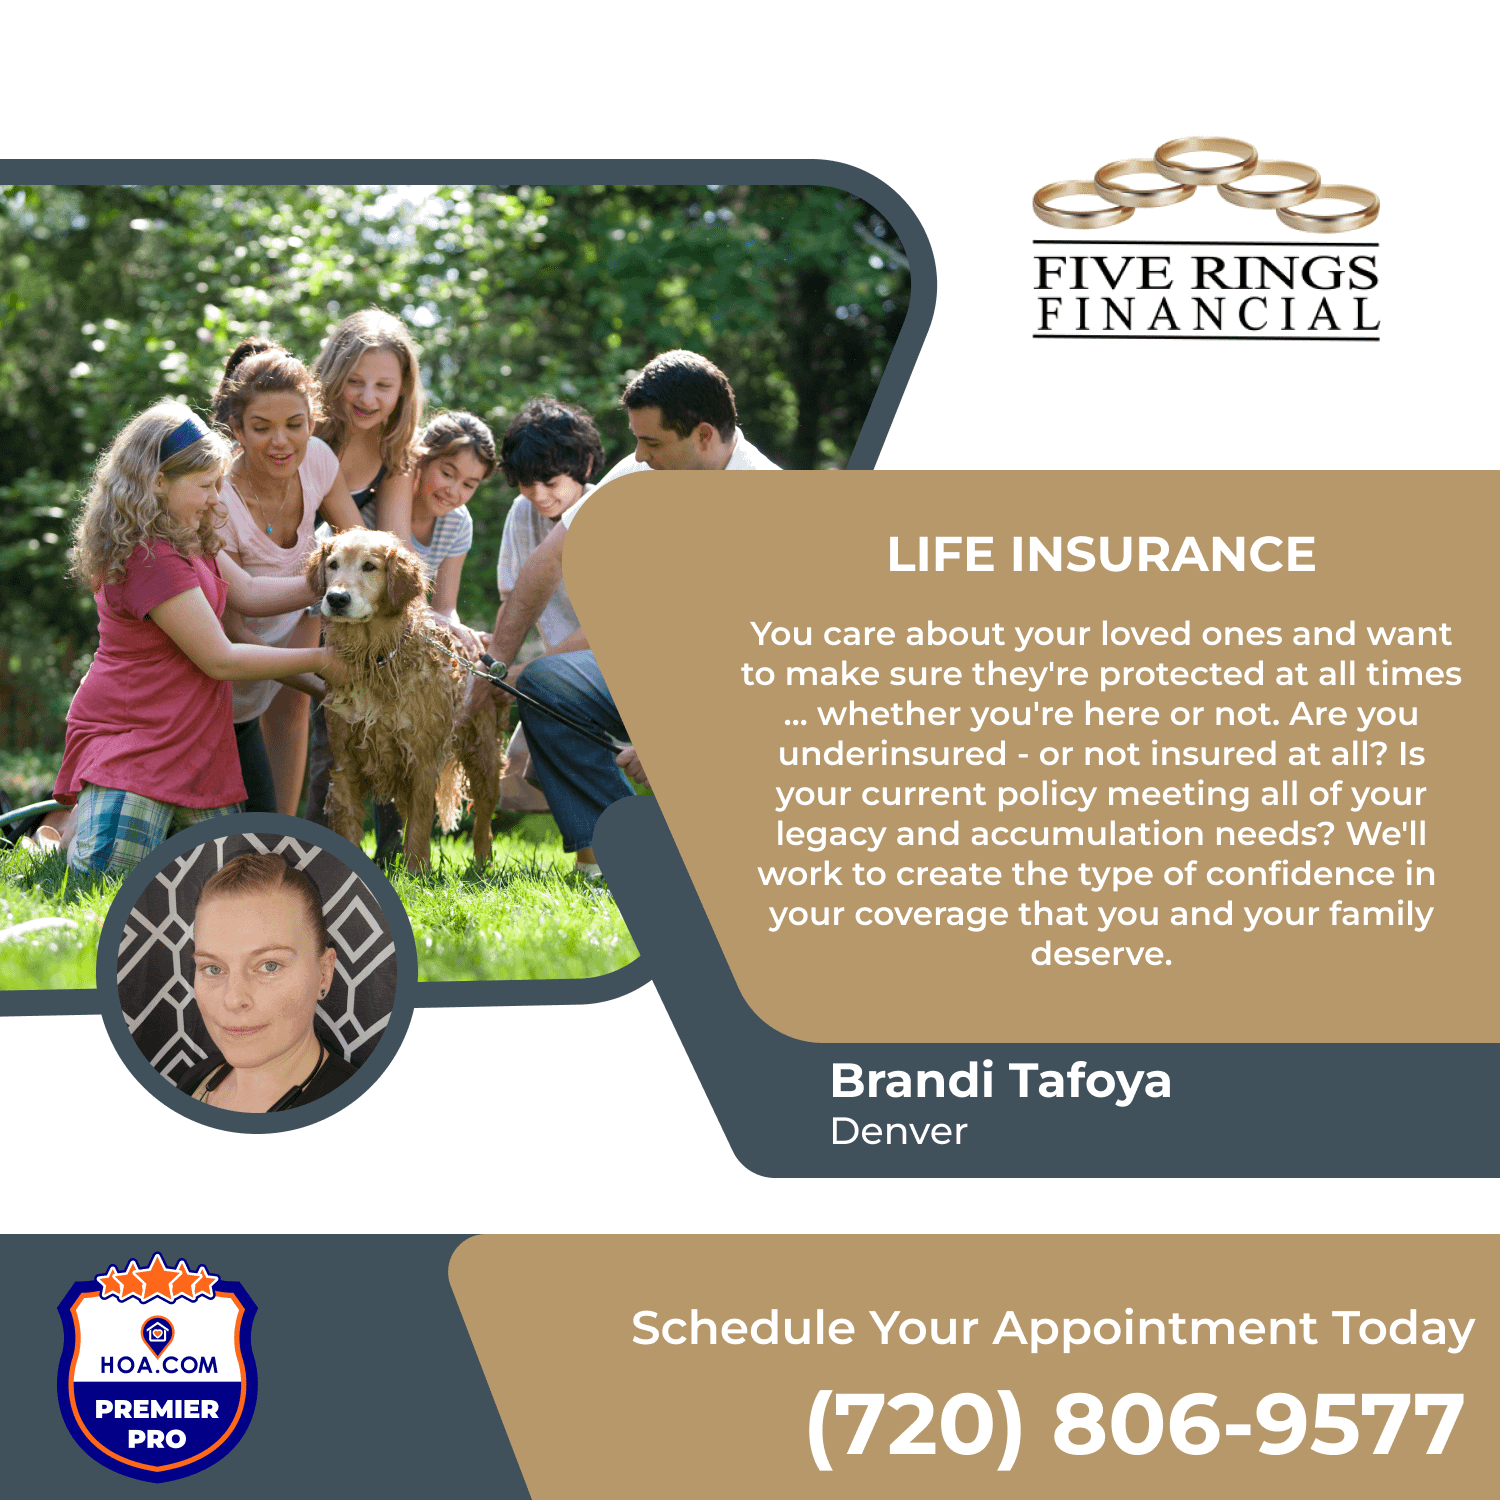 Life insurance, Five Rings Financial